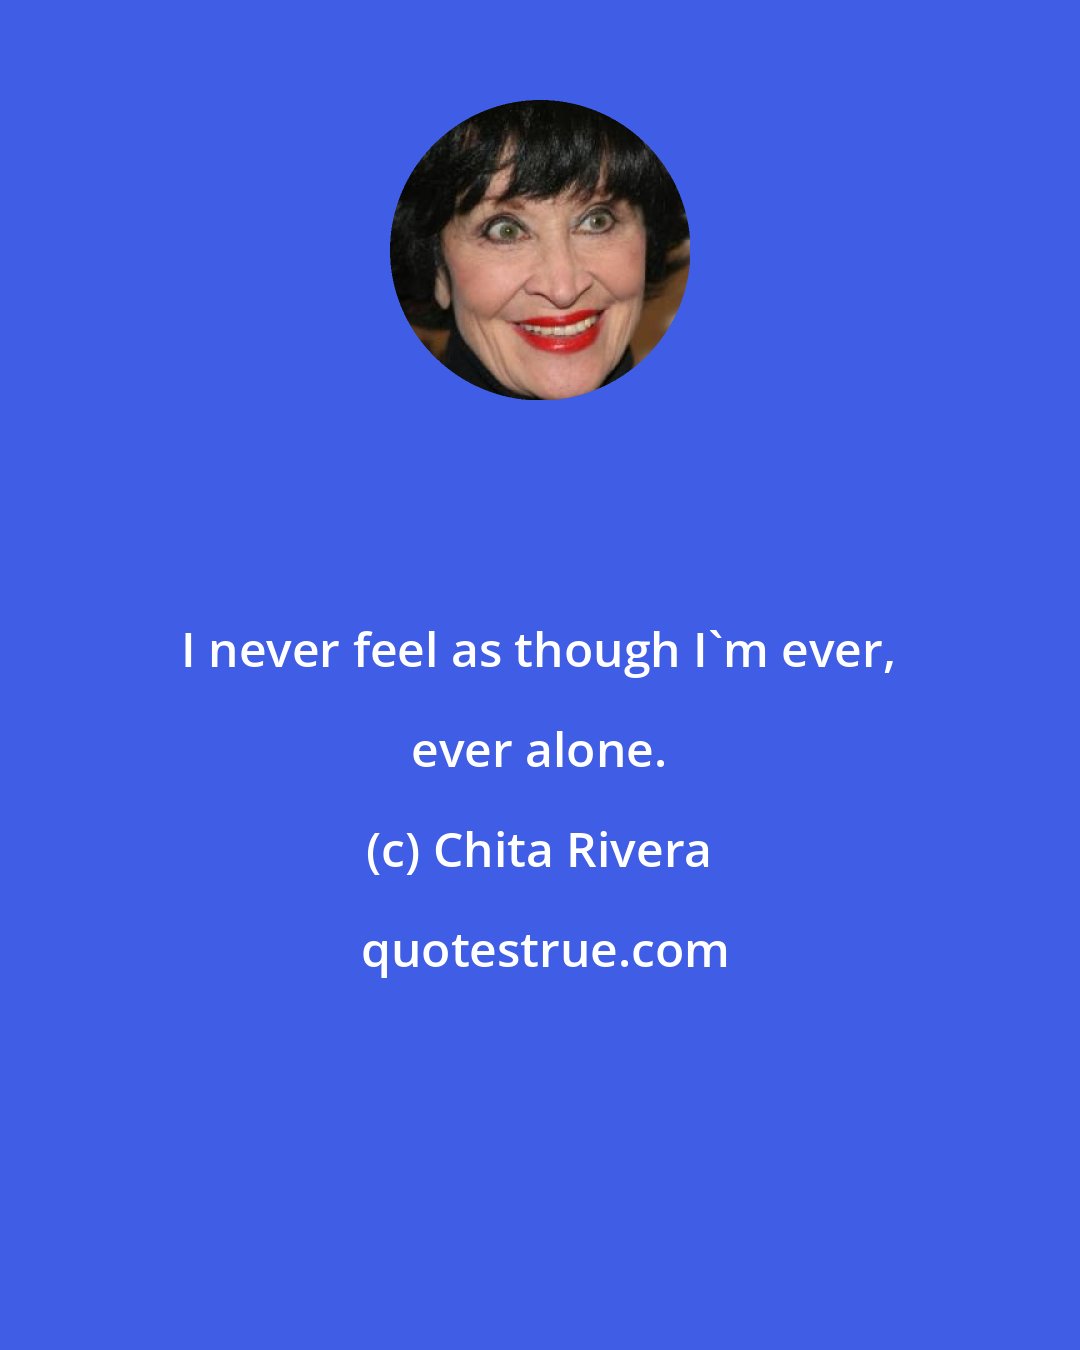 Chita Rivera: I never feel as though I'm ever, ever alone.